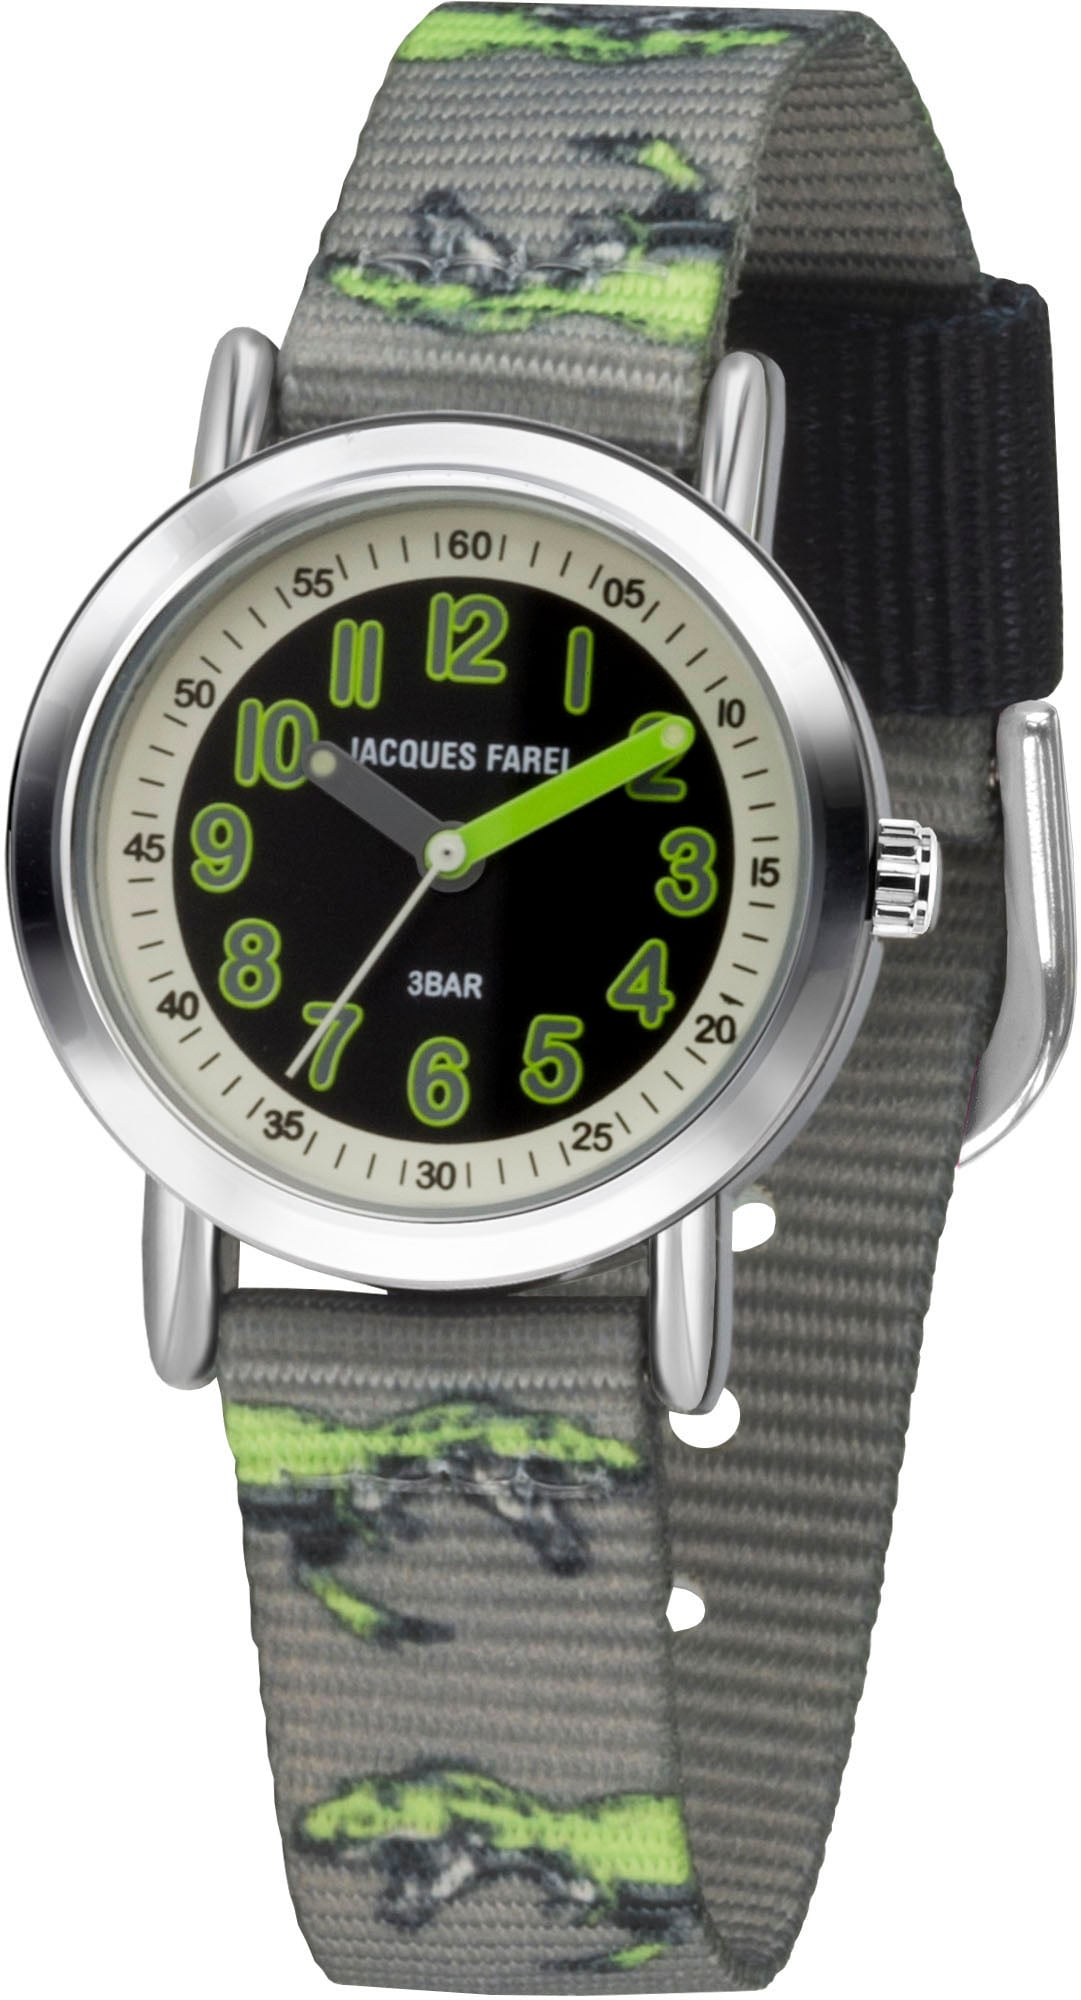 Jacques Farel Quarzuhr »KPS 605, Dinosaurieruhr«, Armbanduhr, Kinderuhr, ideal auch als Geschenk, mit Dinosauriermotiv